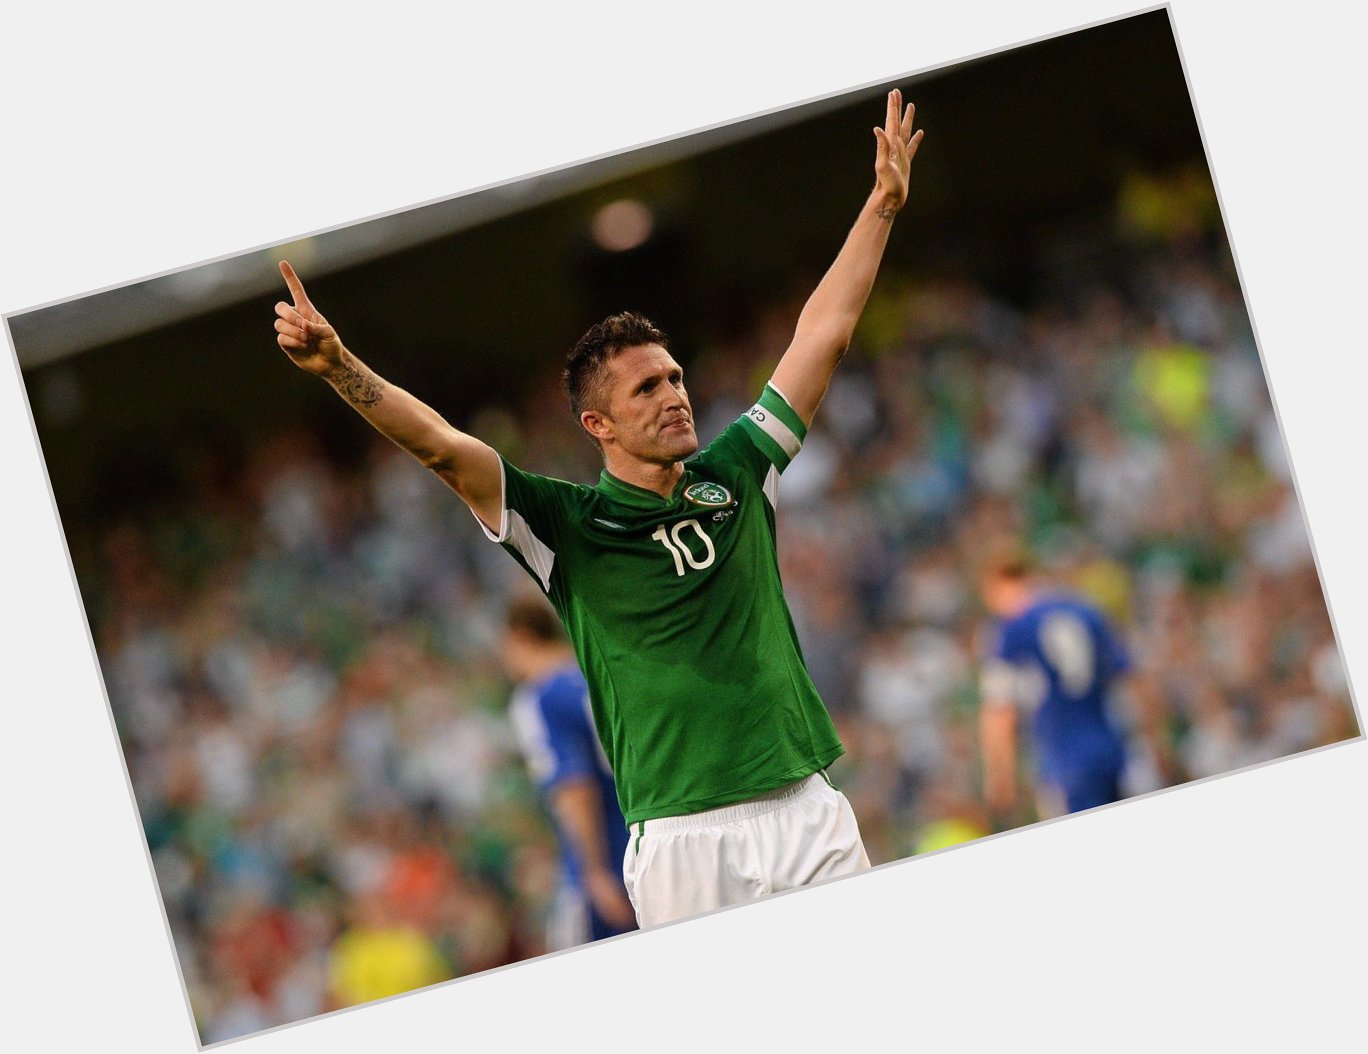 Happy birthday to Republic of Ireland legend Robbie Keane, who turns 37 today!   